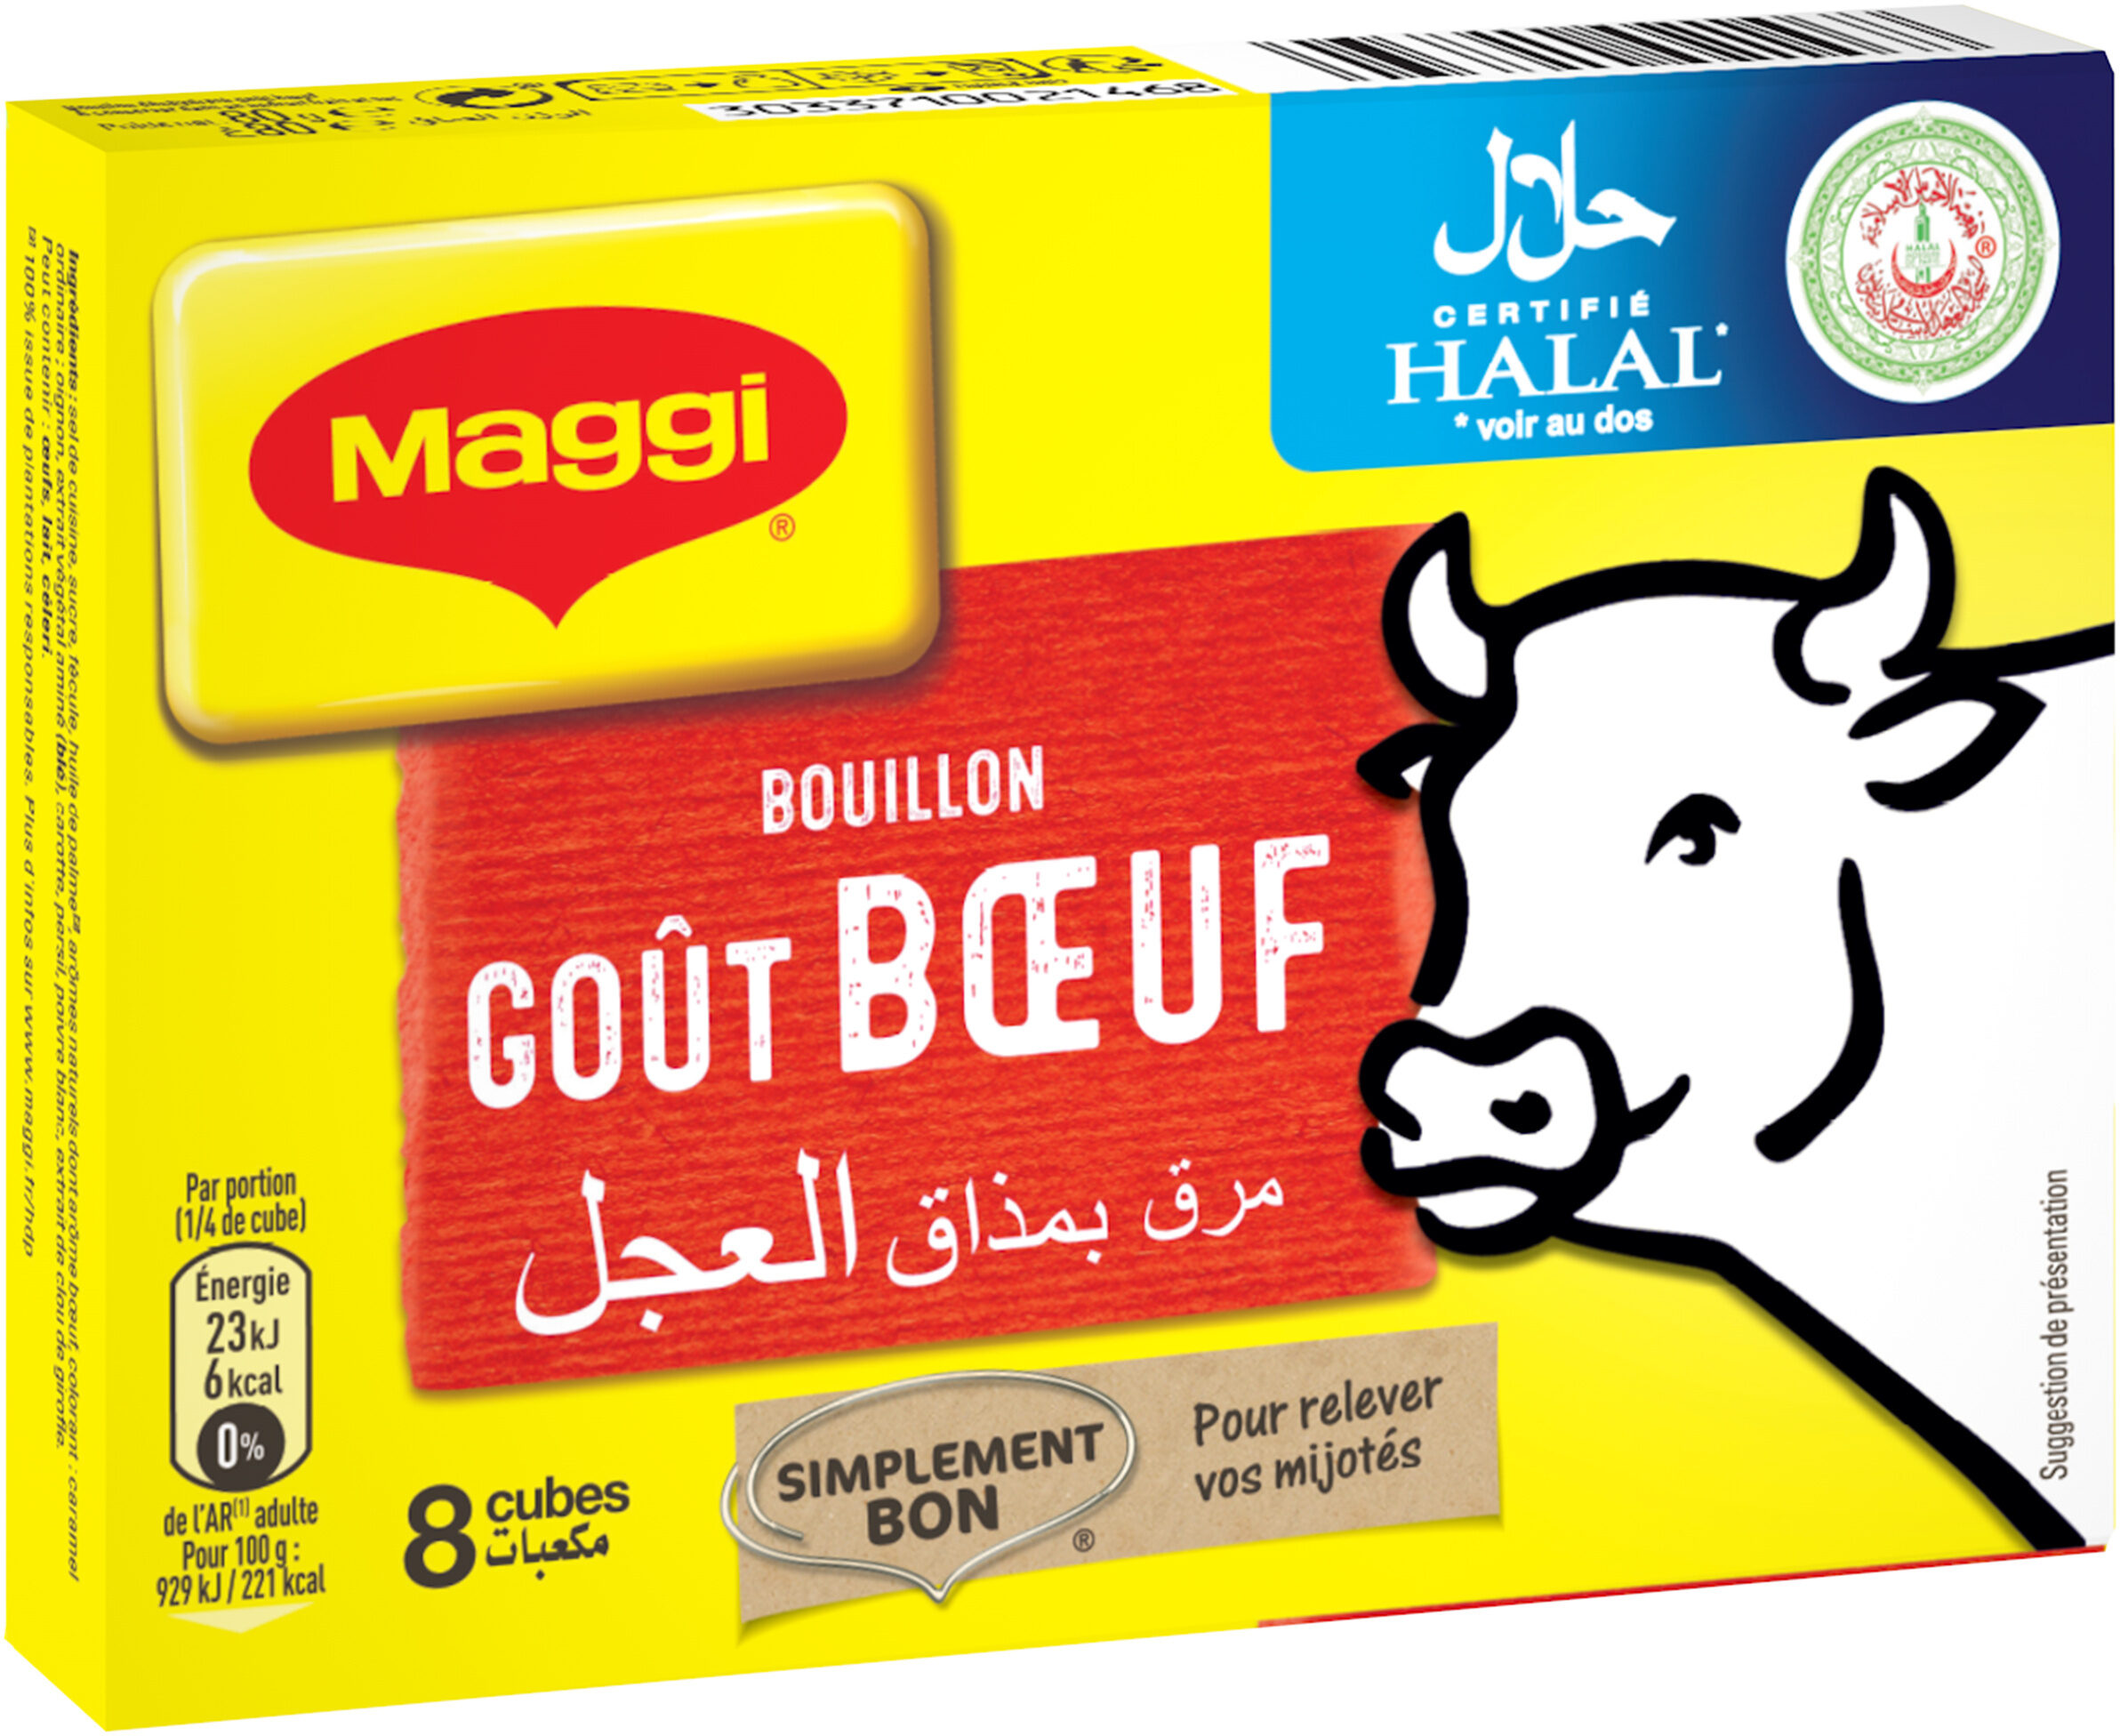 MAGGI Bouillon goût Bœuf Halal 8 tablettes, 80g - Producto - fr